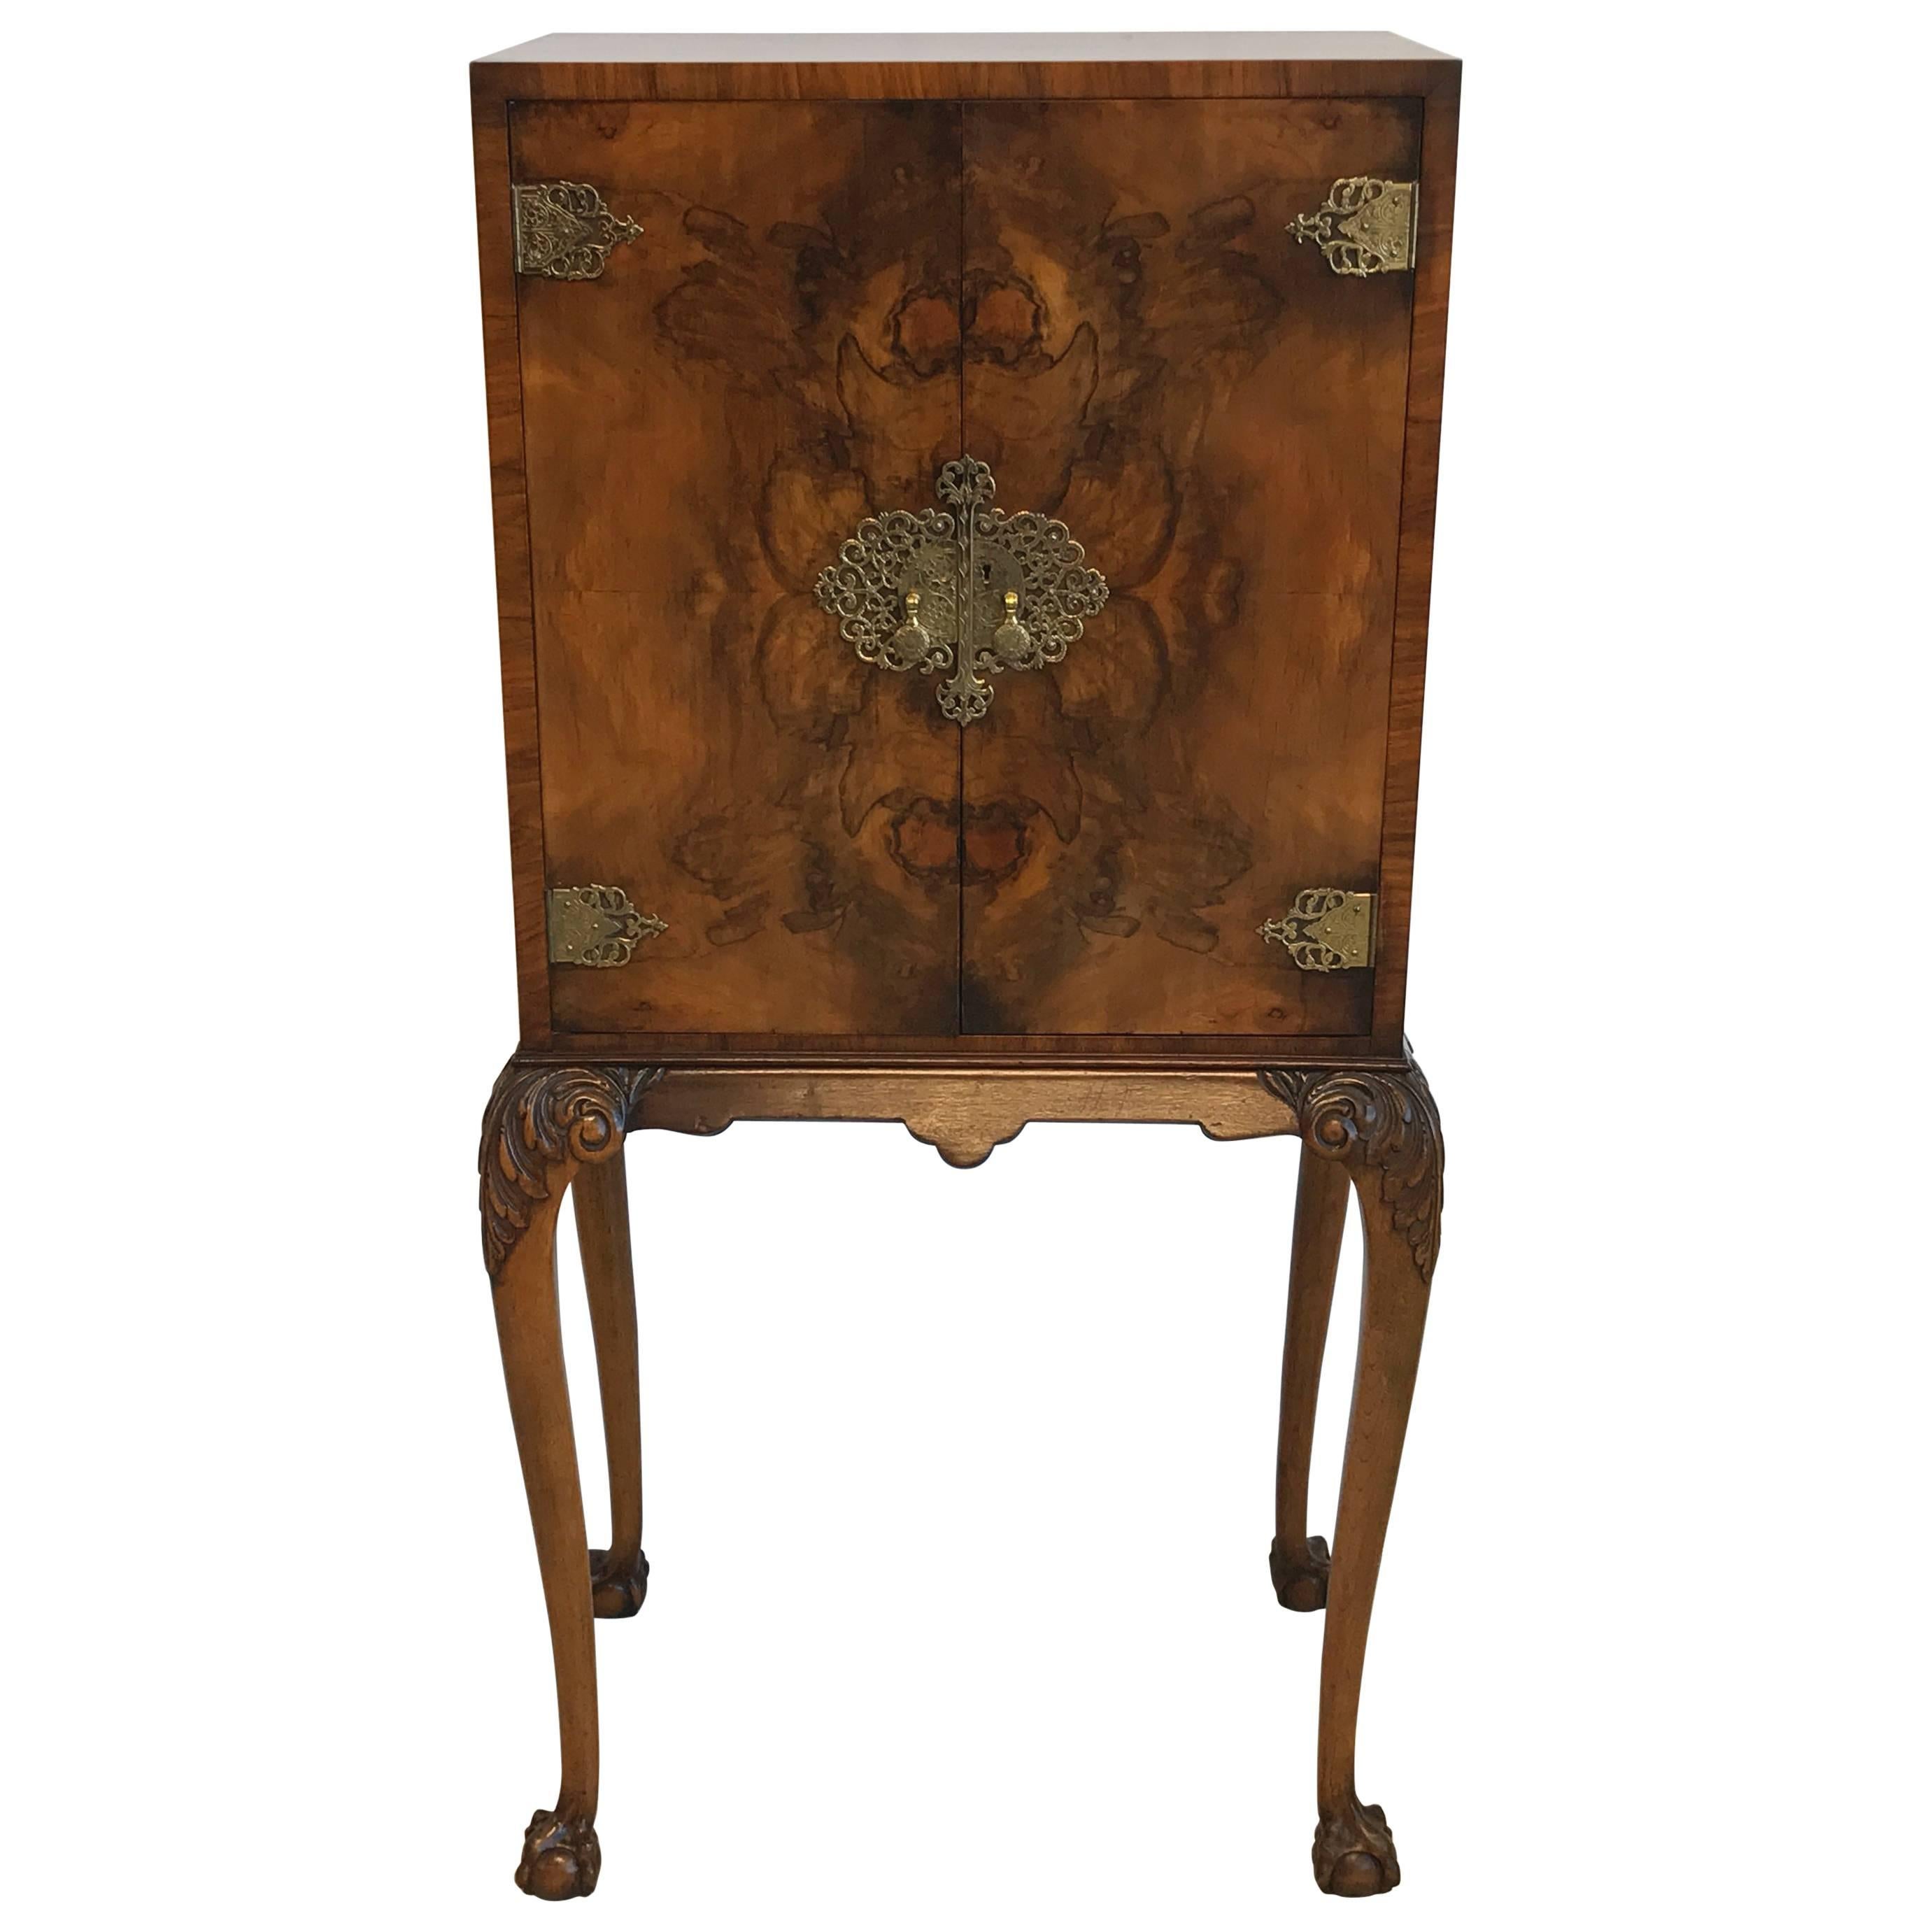 19th Century Maple Burl Wood Bar Cabinet